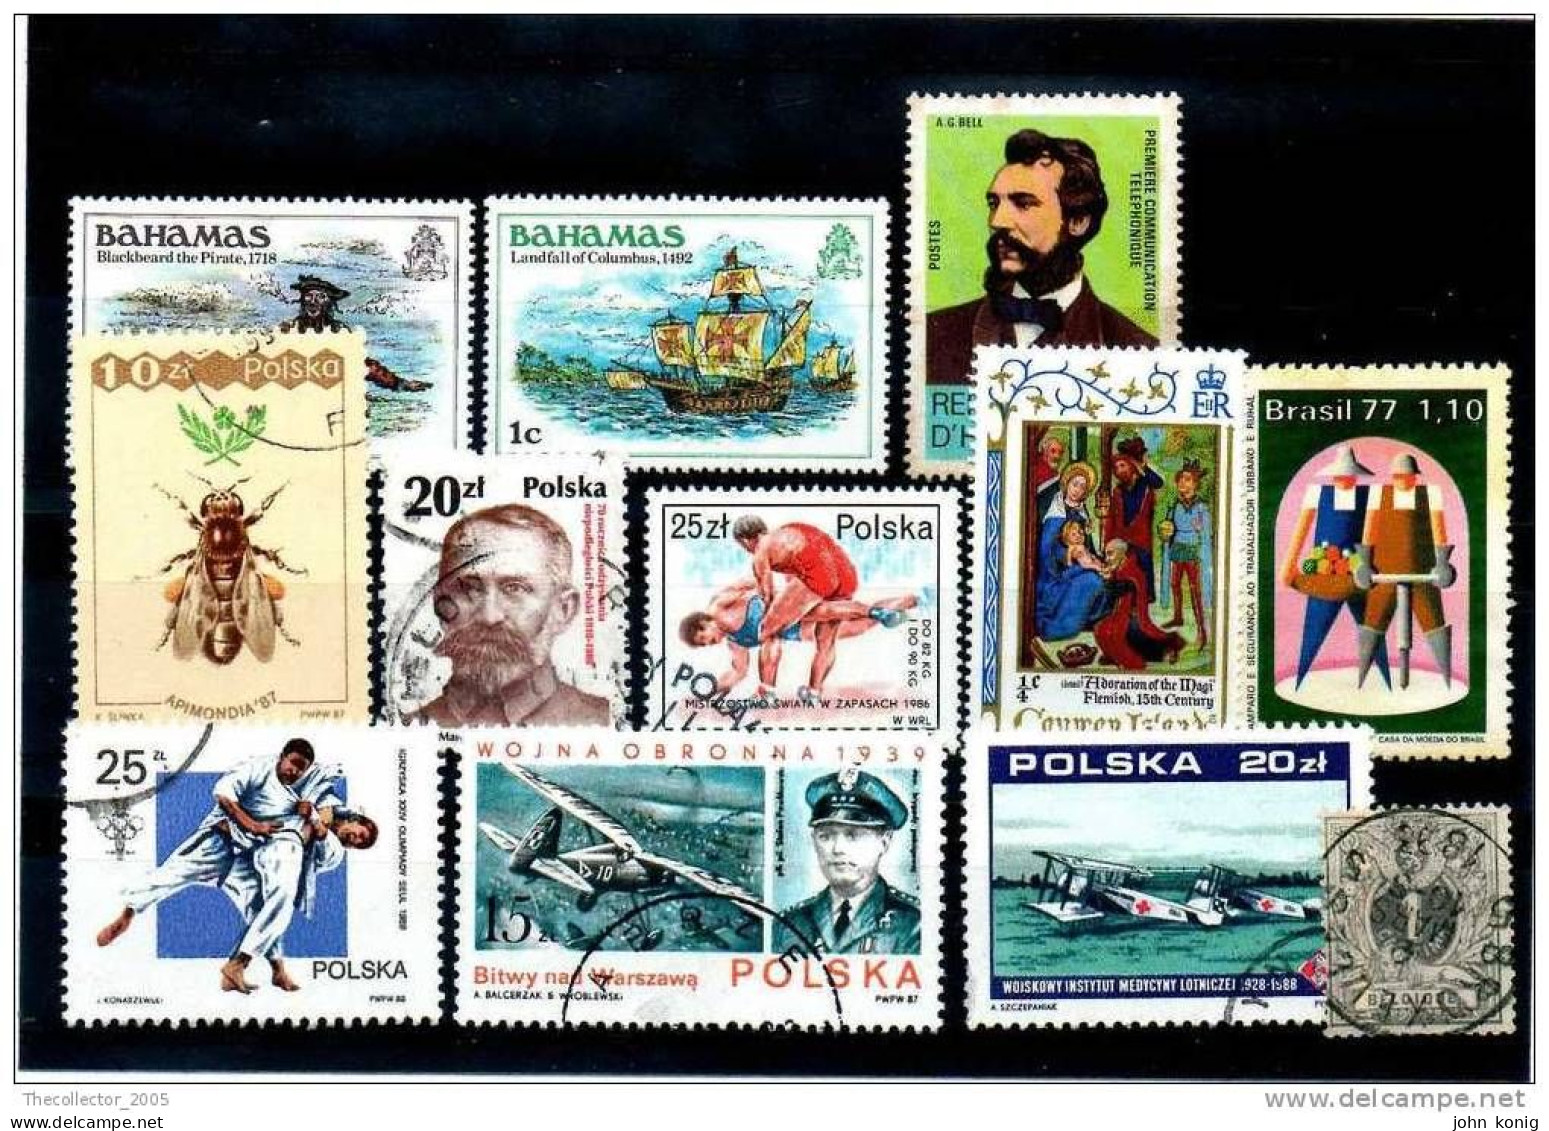 POLSKA BAHAMAS BRASIL - BRASILE POLONIA BAHAMAS - Lotto Francobolli Nuovi & Usati - Mixed Lot Of New & Used Stamps - Sammlungen